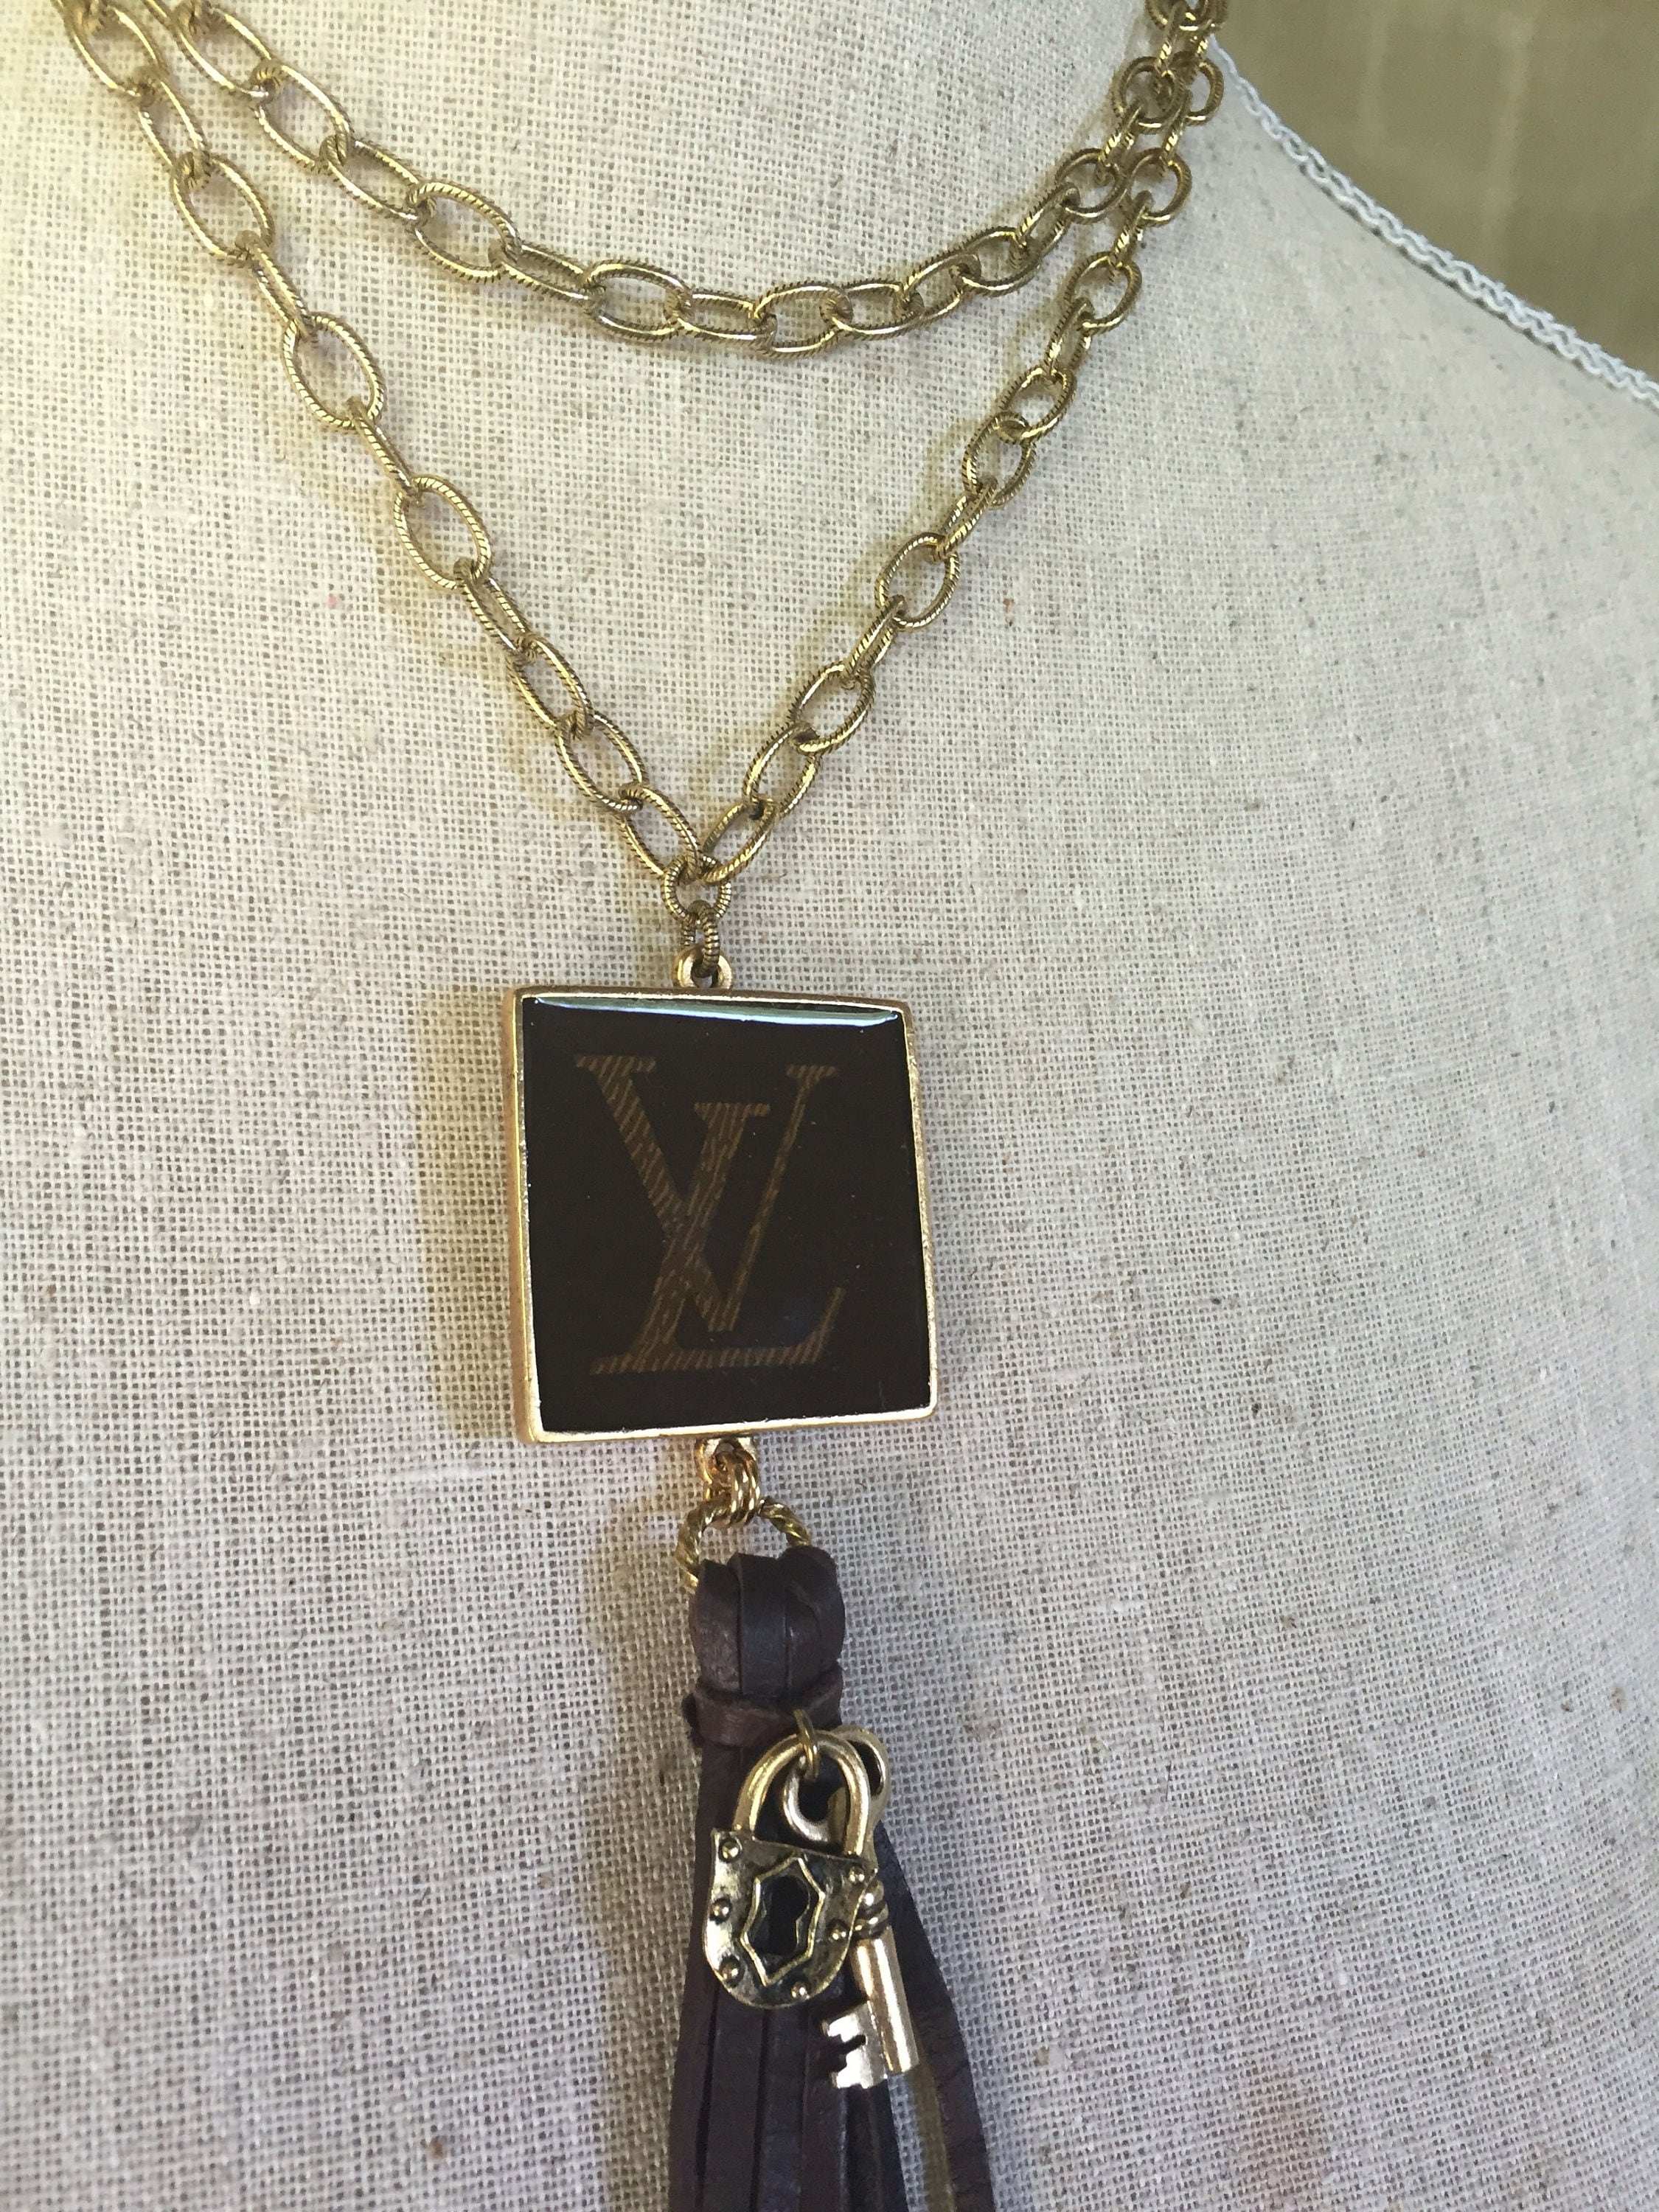 LV INSPIRED Charm Necklace handmade/repurposed from LV bag.